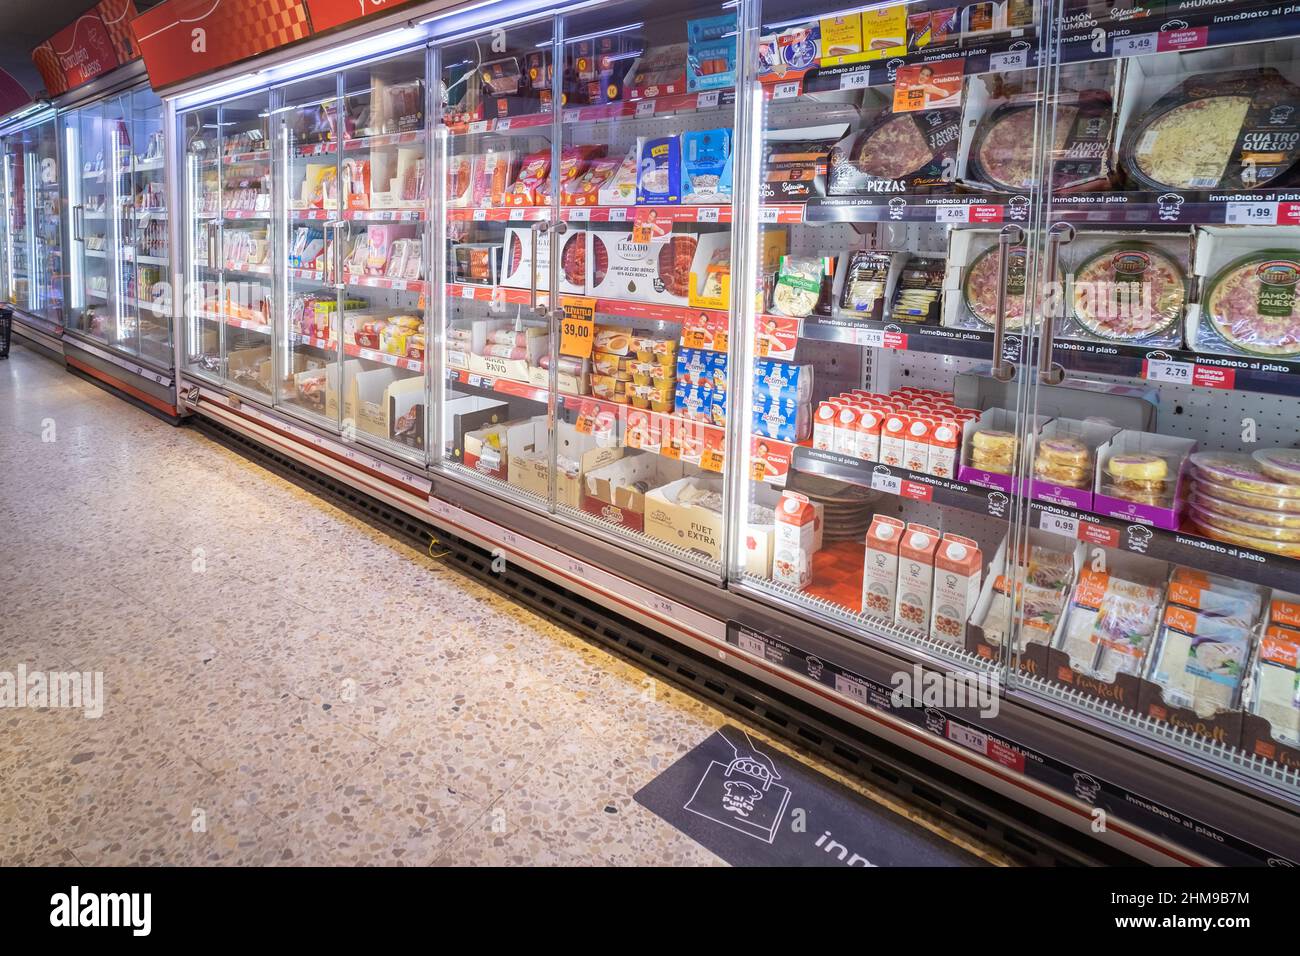 Frozen area of the Dia supermarket chain Stock Photo - Alamy